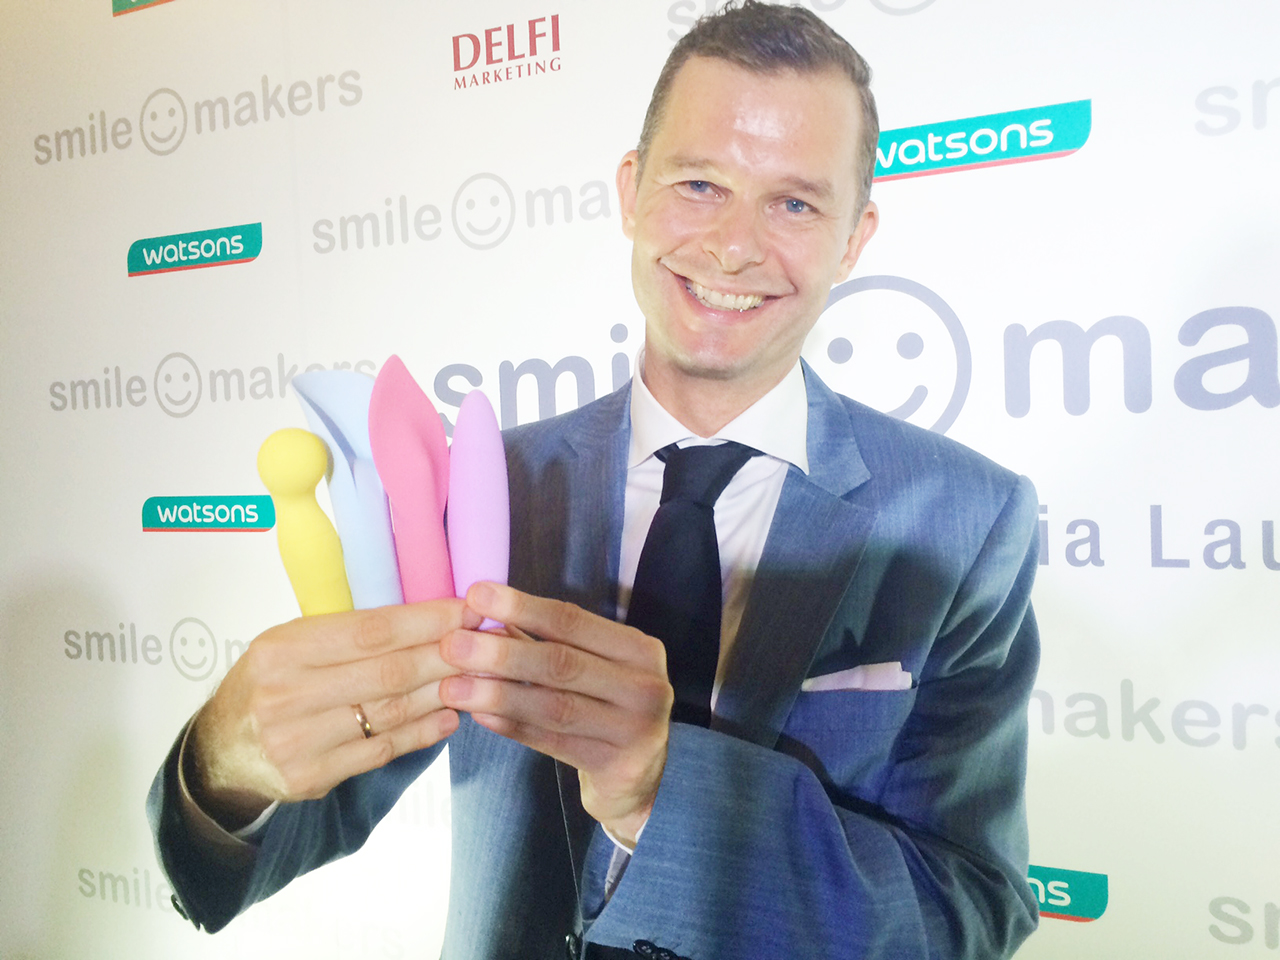 Mr. Mattias Hulting, the co-founder of Ramblin’ Brands